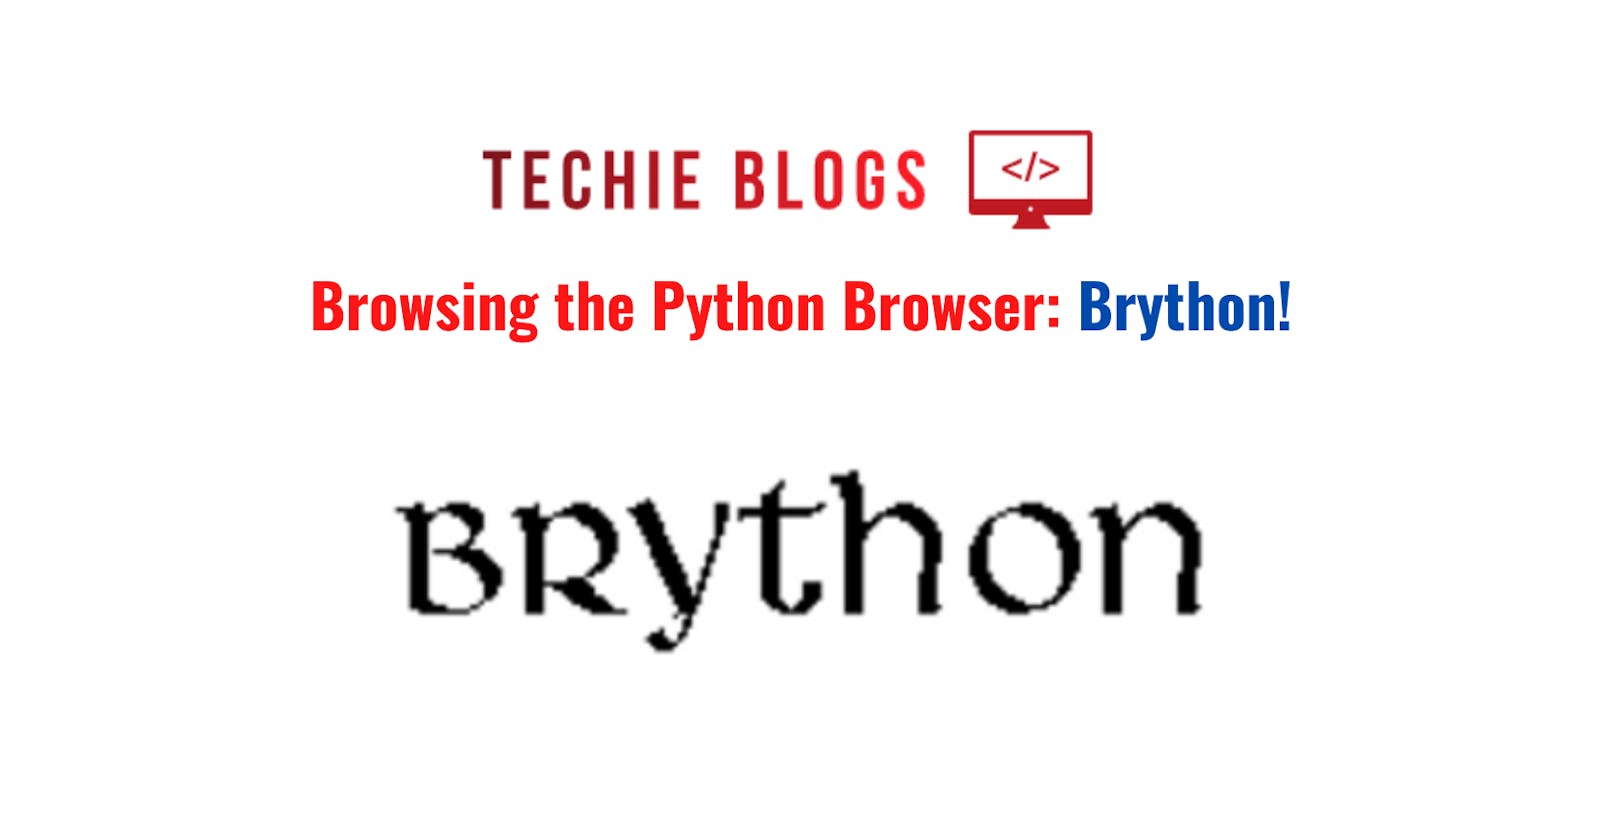 Browsing the Python Browser: Brython!